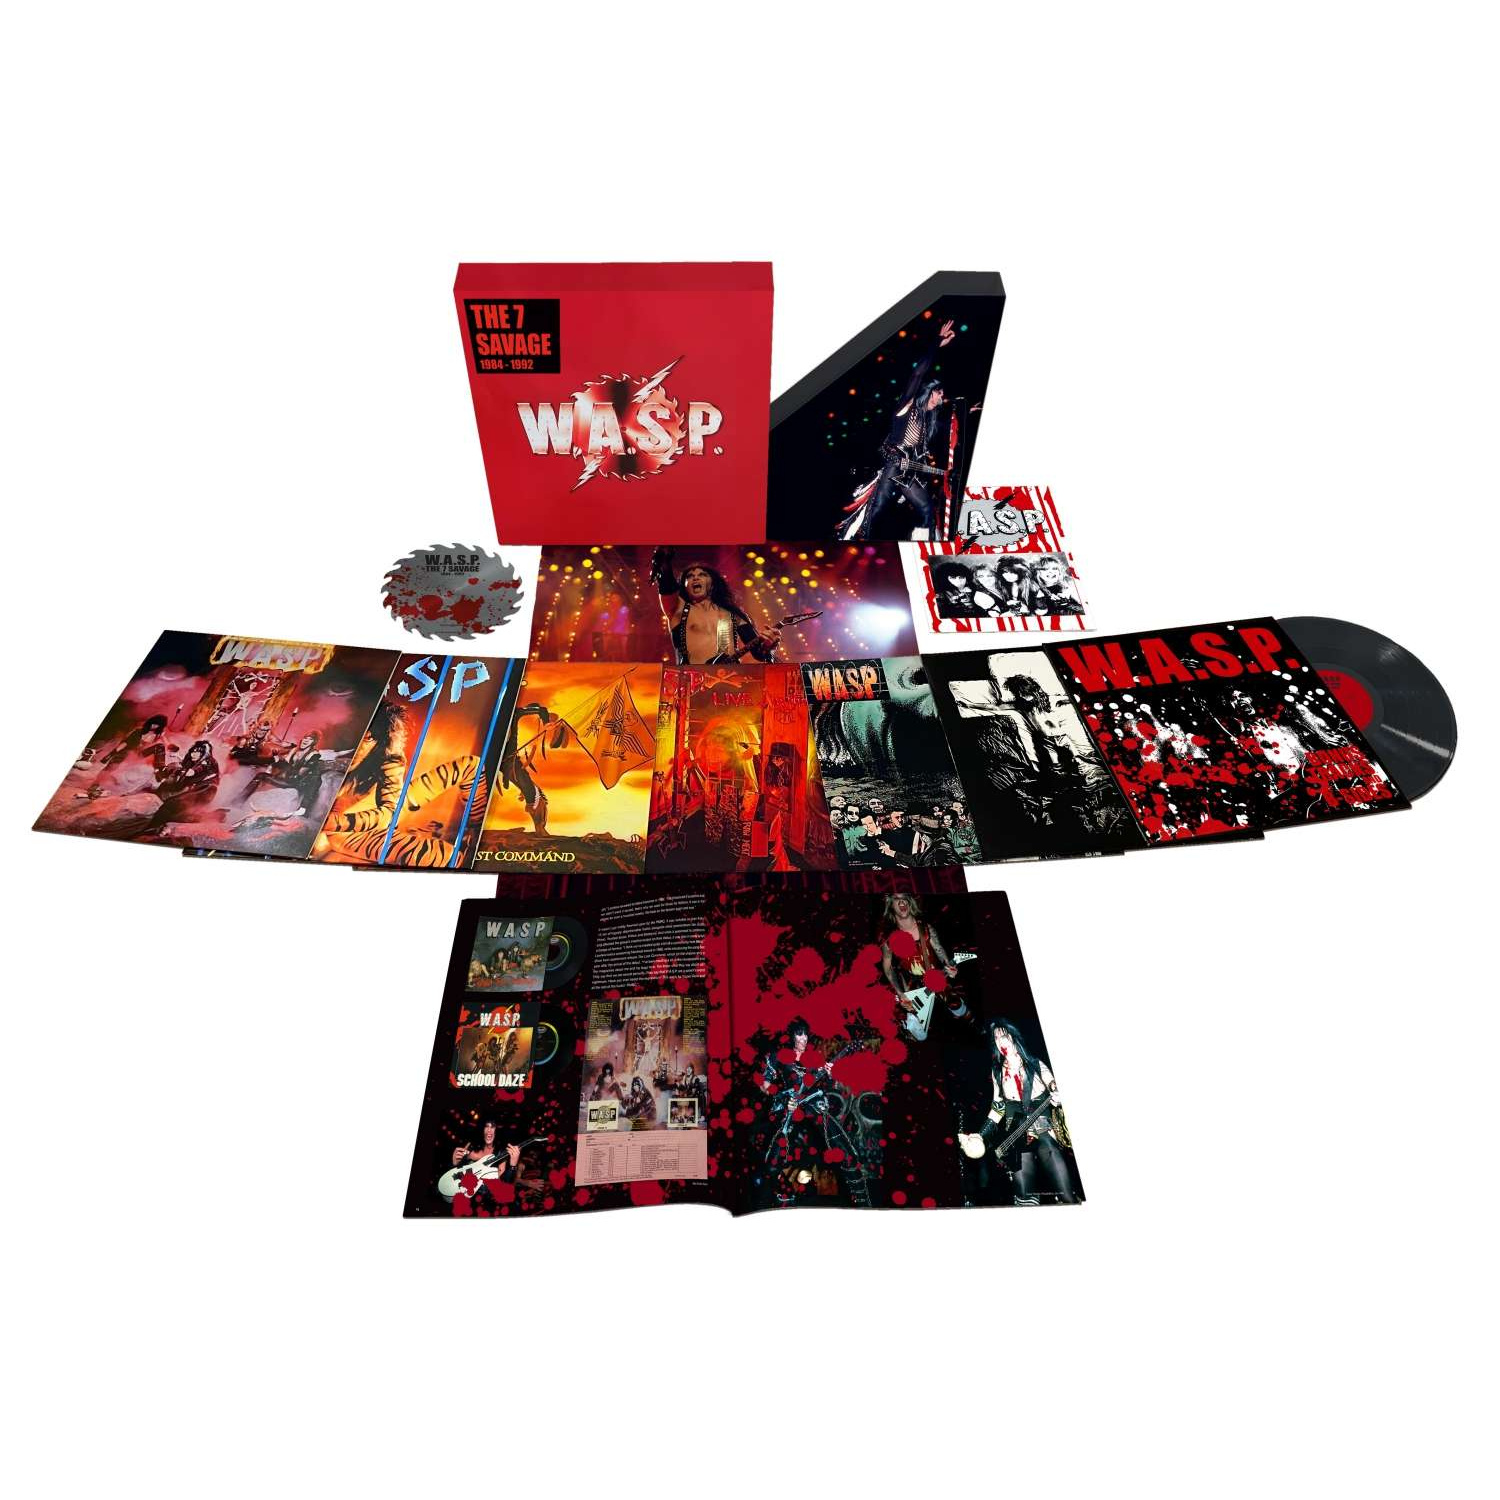 THE 7 SAVAGE: 1984-1992 - 8 LP BOXSET LTD.ED.